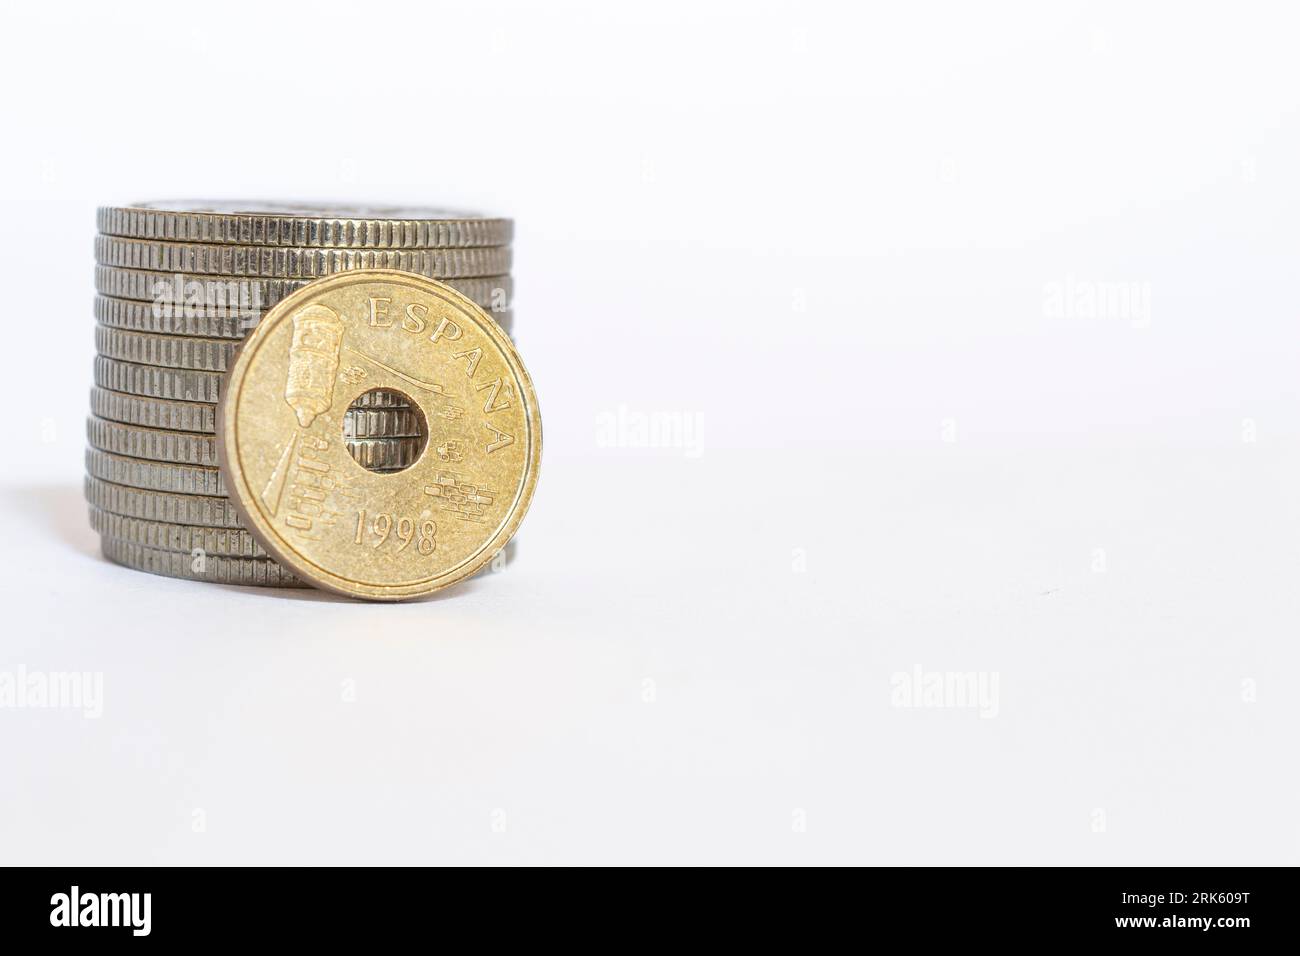 A closeup of an Old spanish peseta coin on a white backgroun Stock Photo